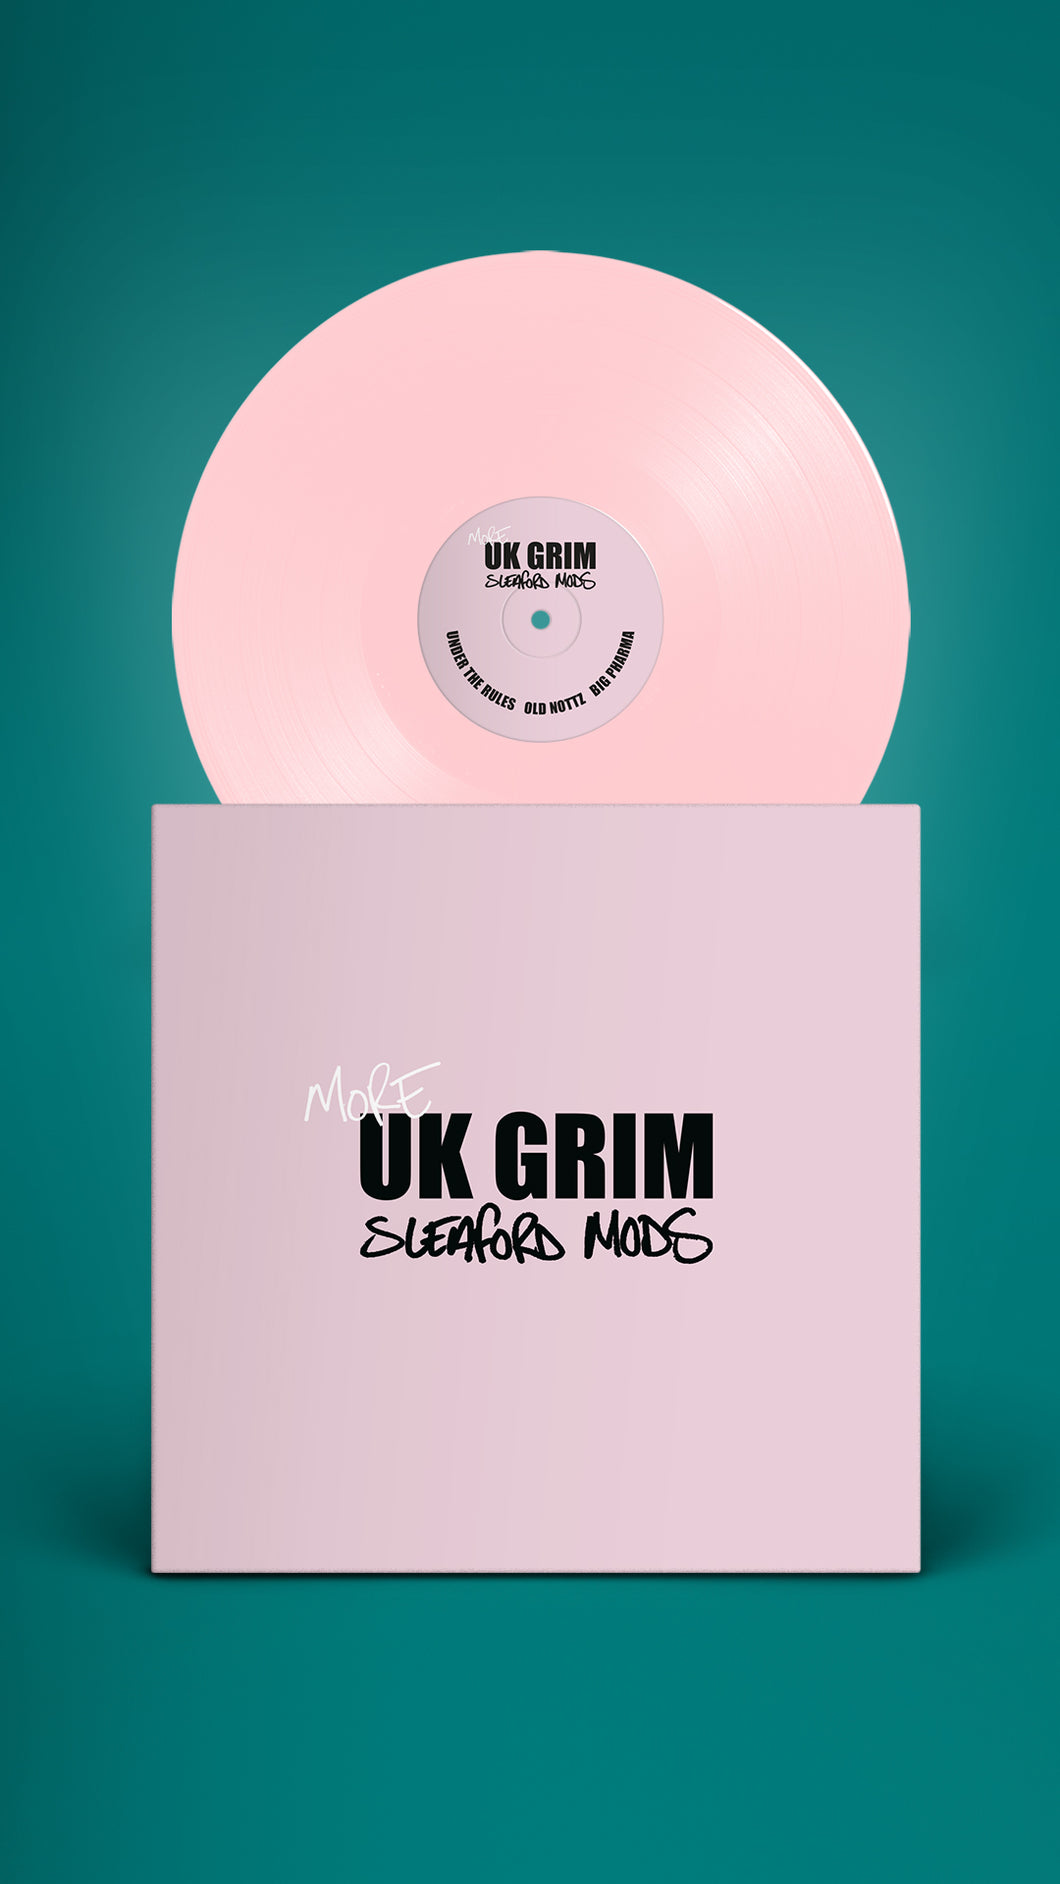 Sleaford Mods - More Grim Ltd Ed Pink Vinyl 12